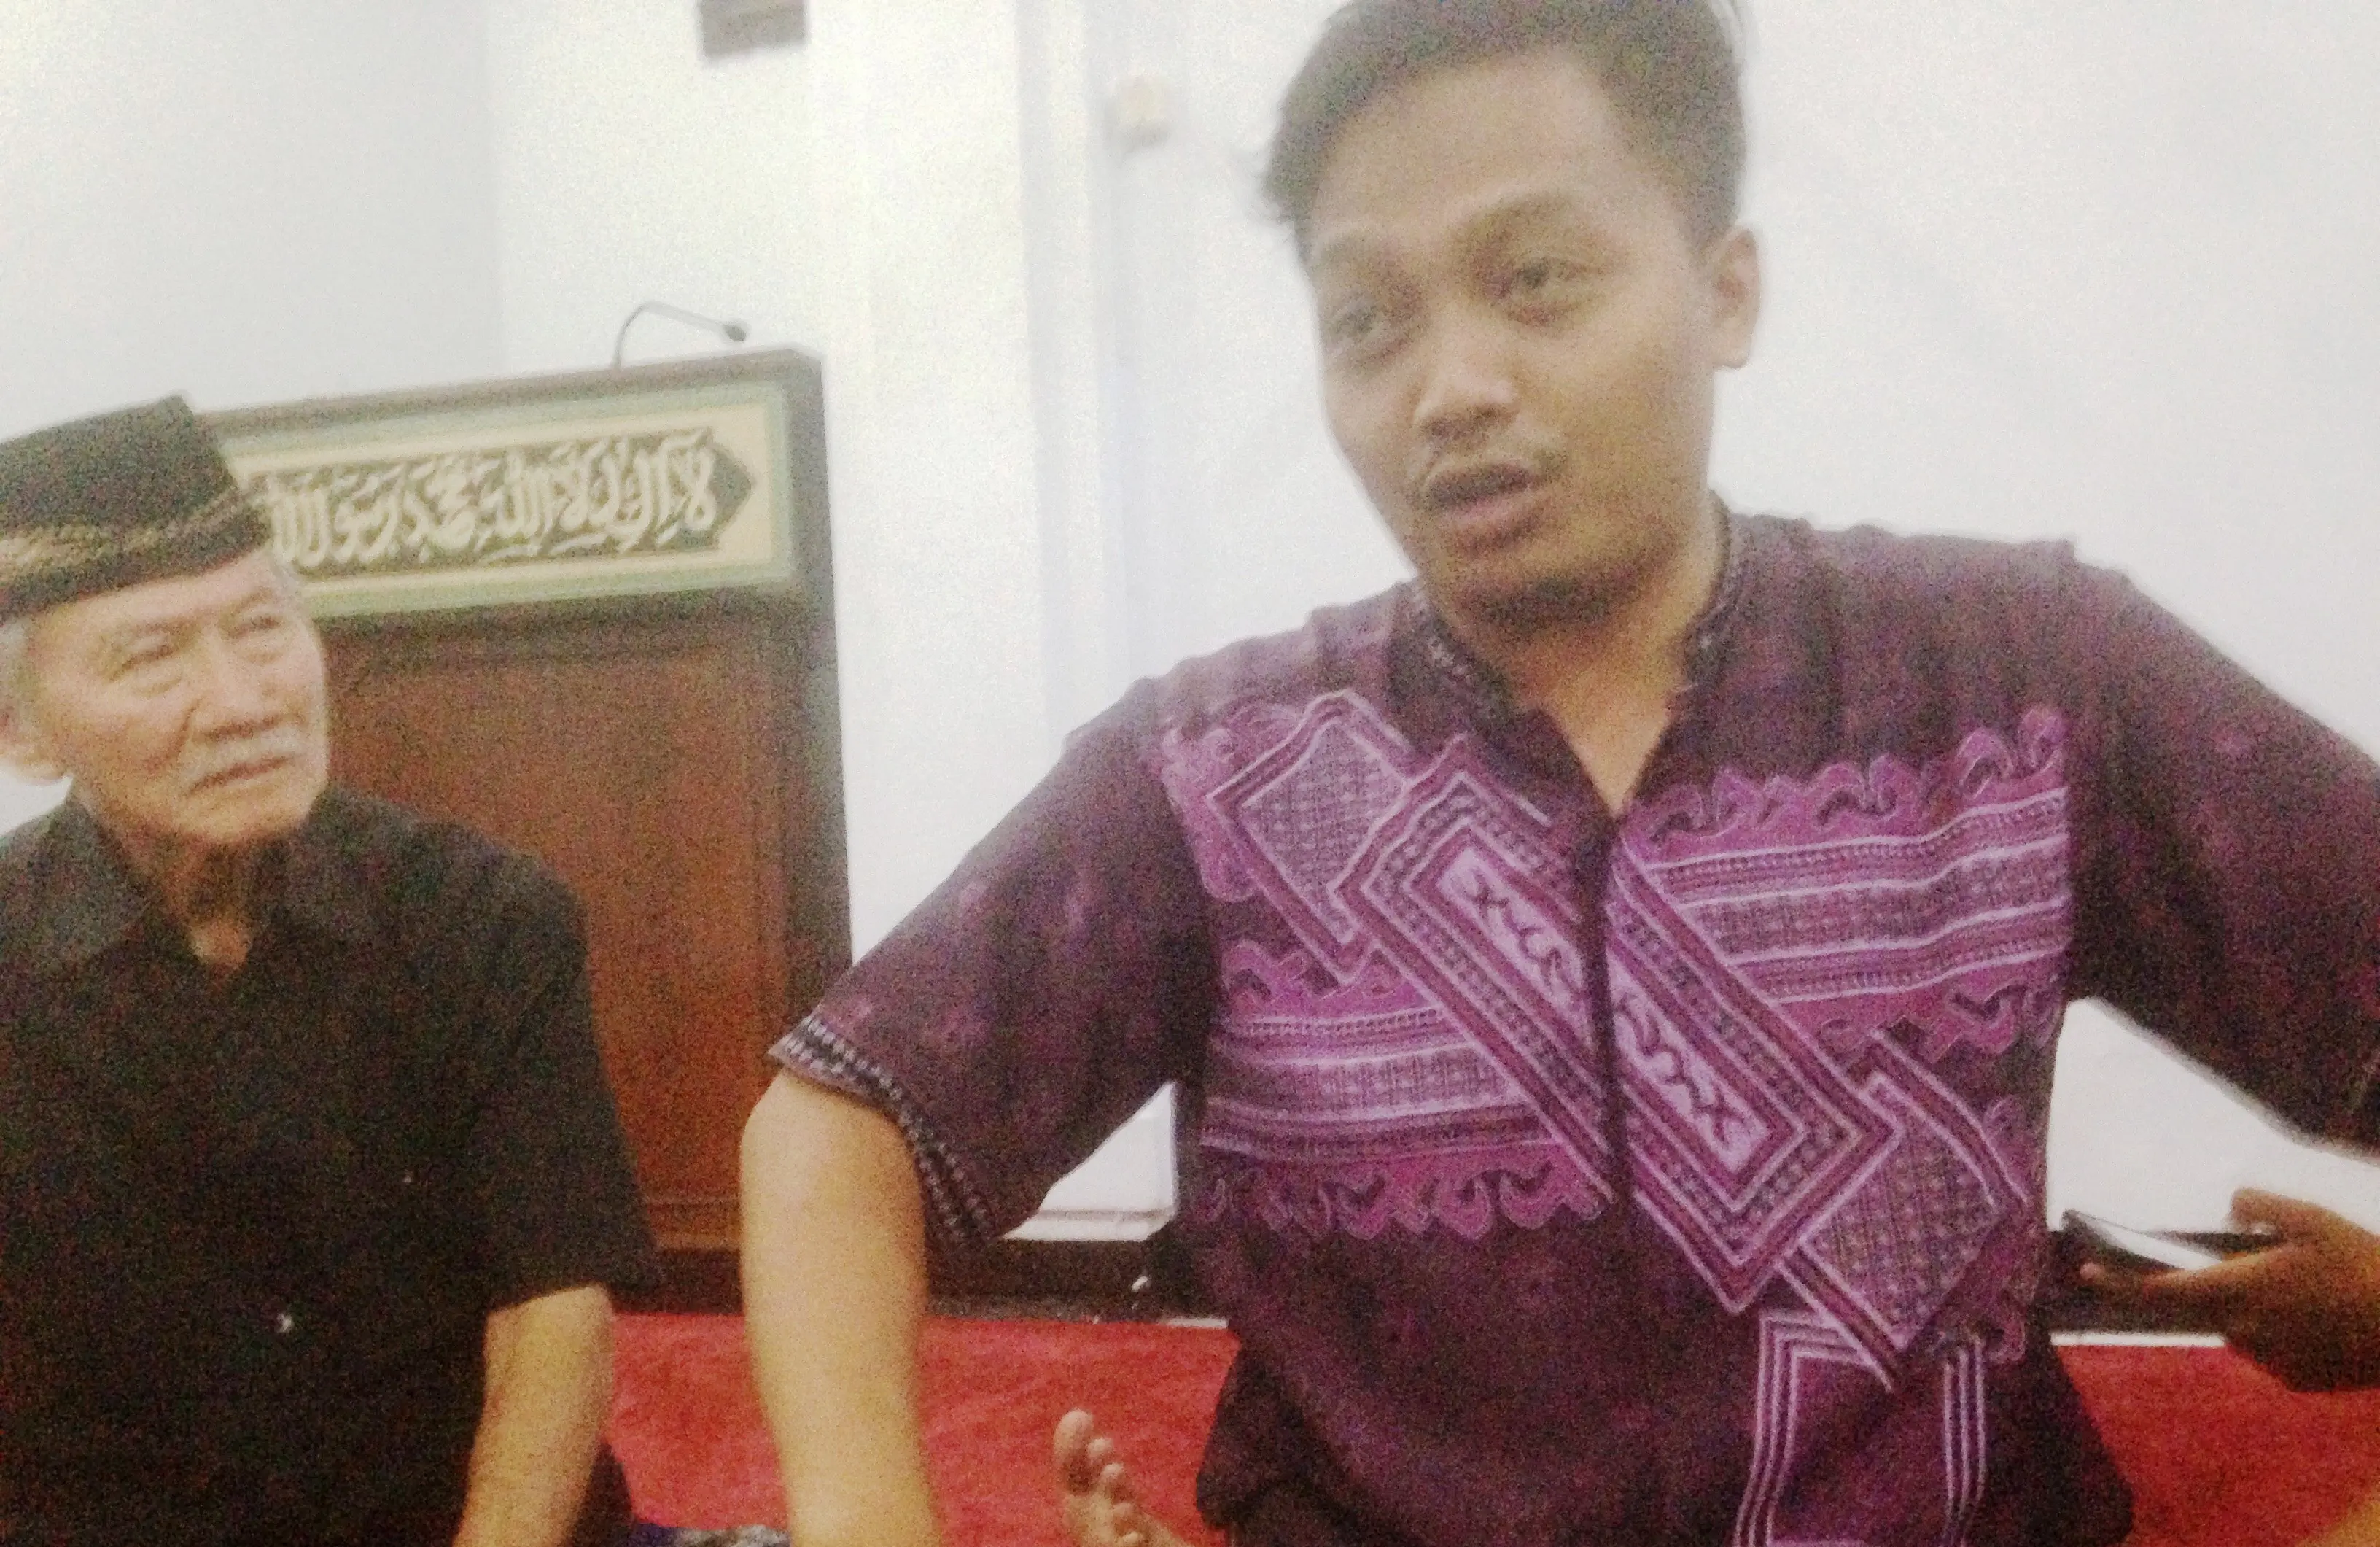 Saksi penyiraman air keras ke wajah penyidik KPK Novel Baswedan, Eko Julianto (26). (Liputan6.com/Muhammad Radityo Priyasmoro)